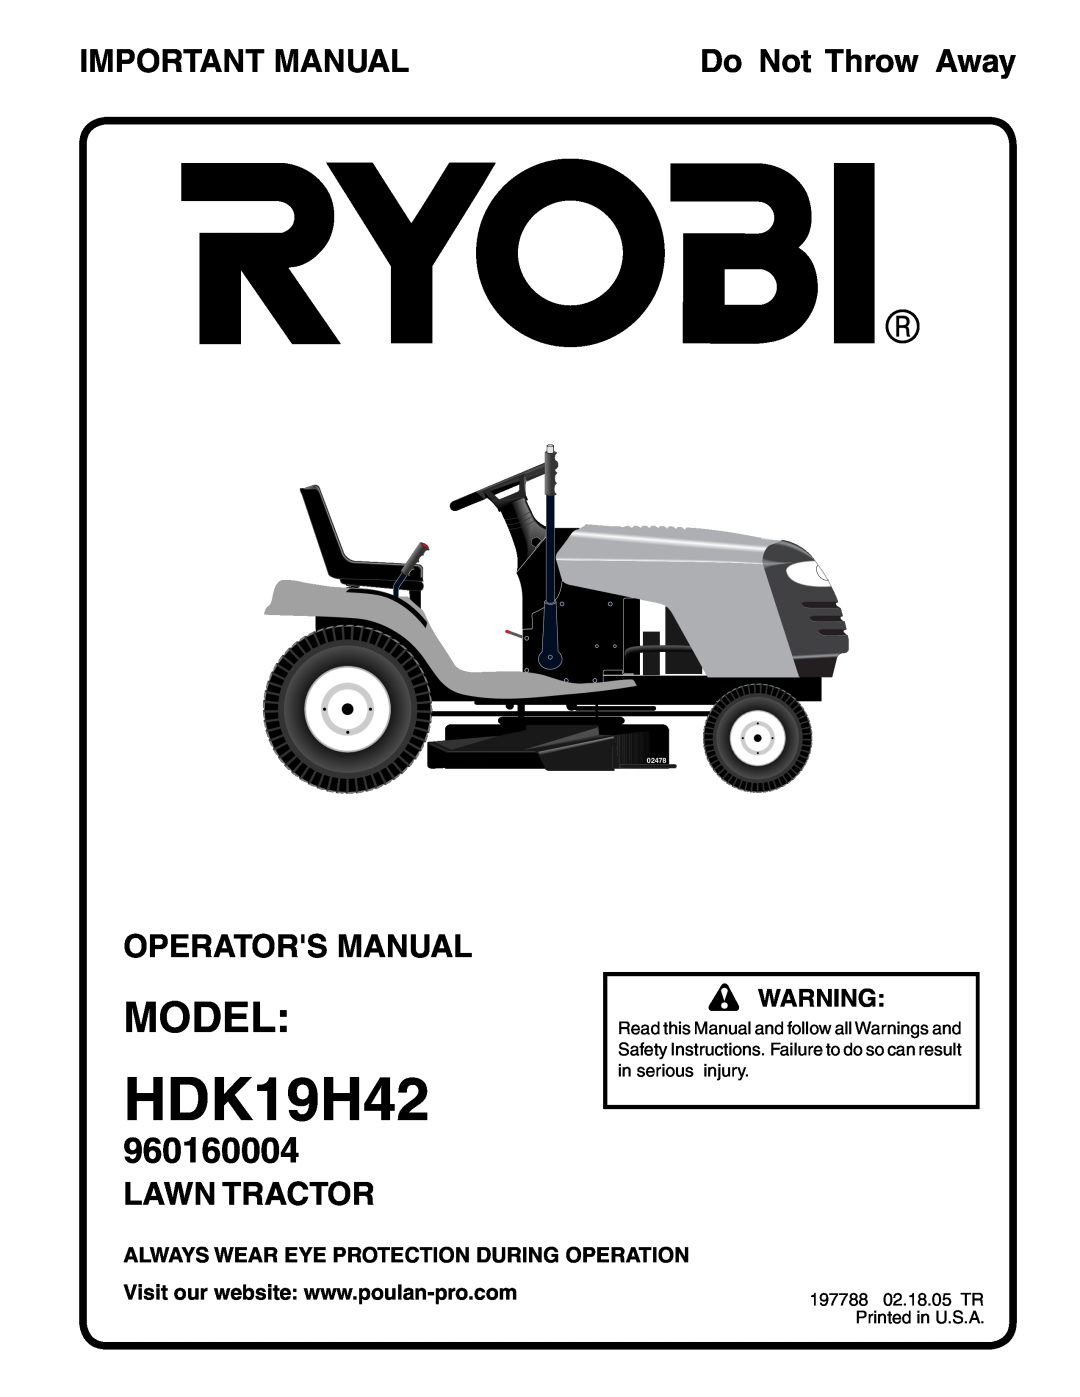 Poulan HDK19H42 manual Model, Important Manual, Do Not Throw Away, Operators Manual, Lawn Tractor, 960160004, 02478 